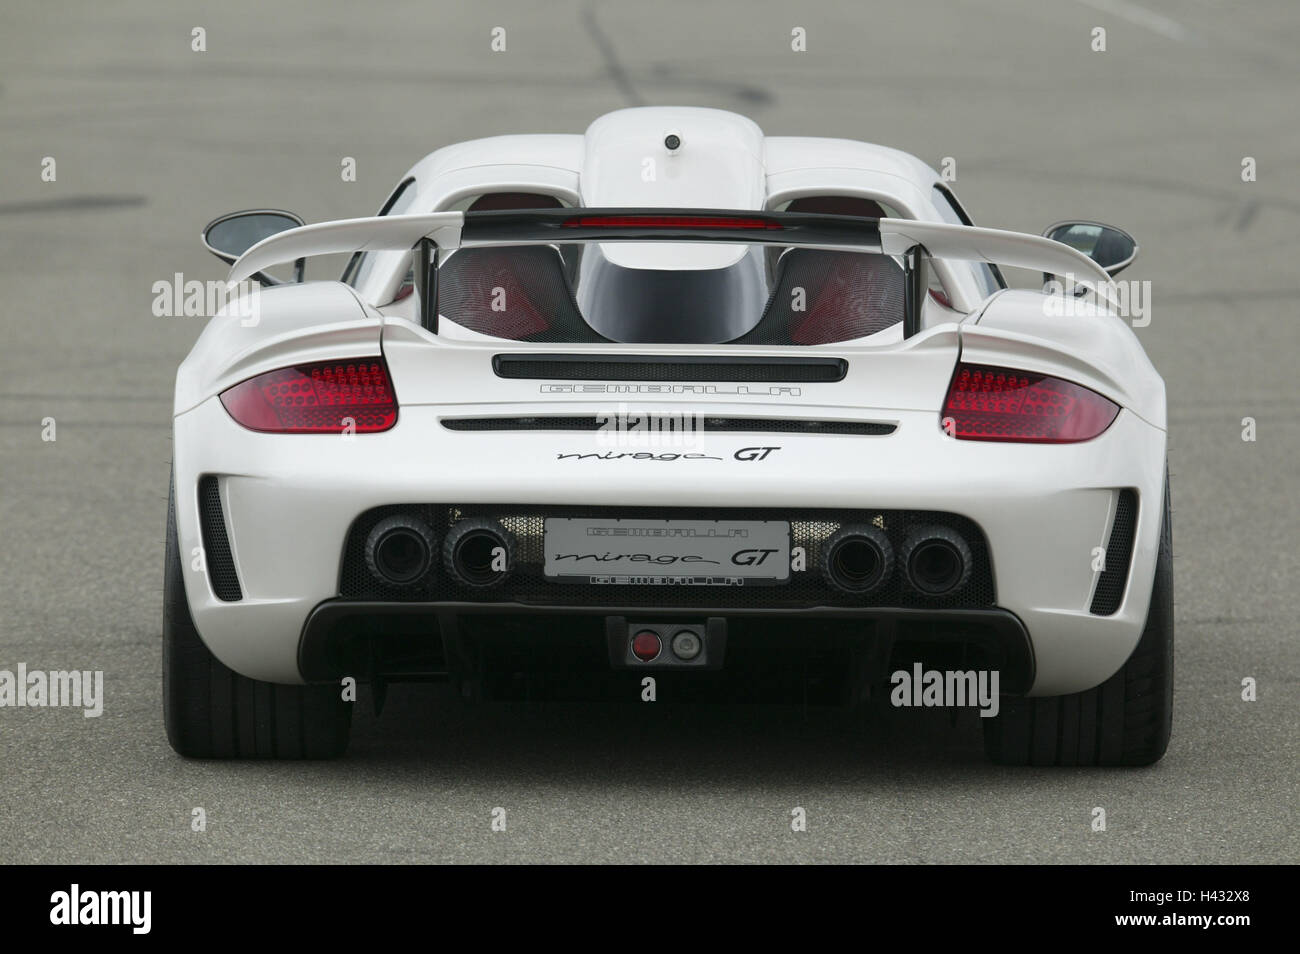 Gemballa Porsche Mirage Gt White Rear View Stock Photo Alamy